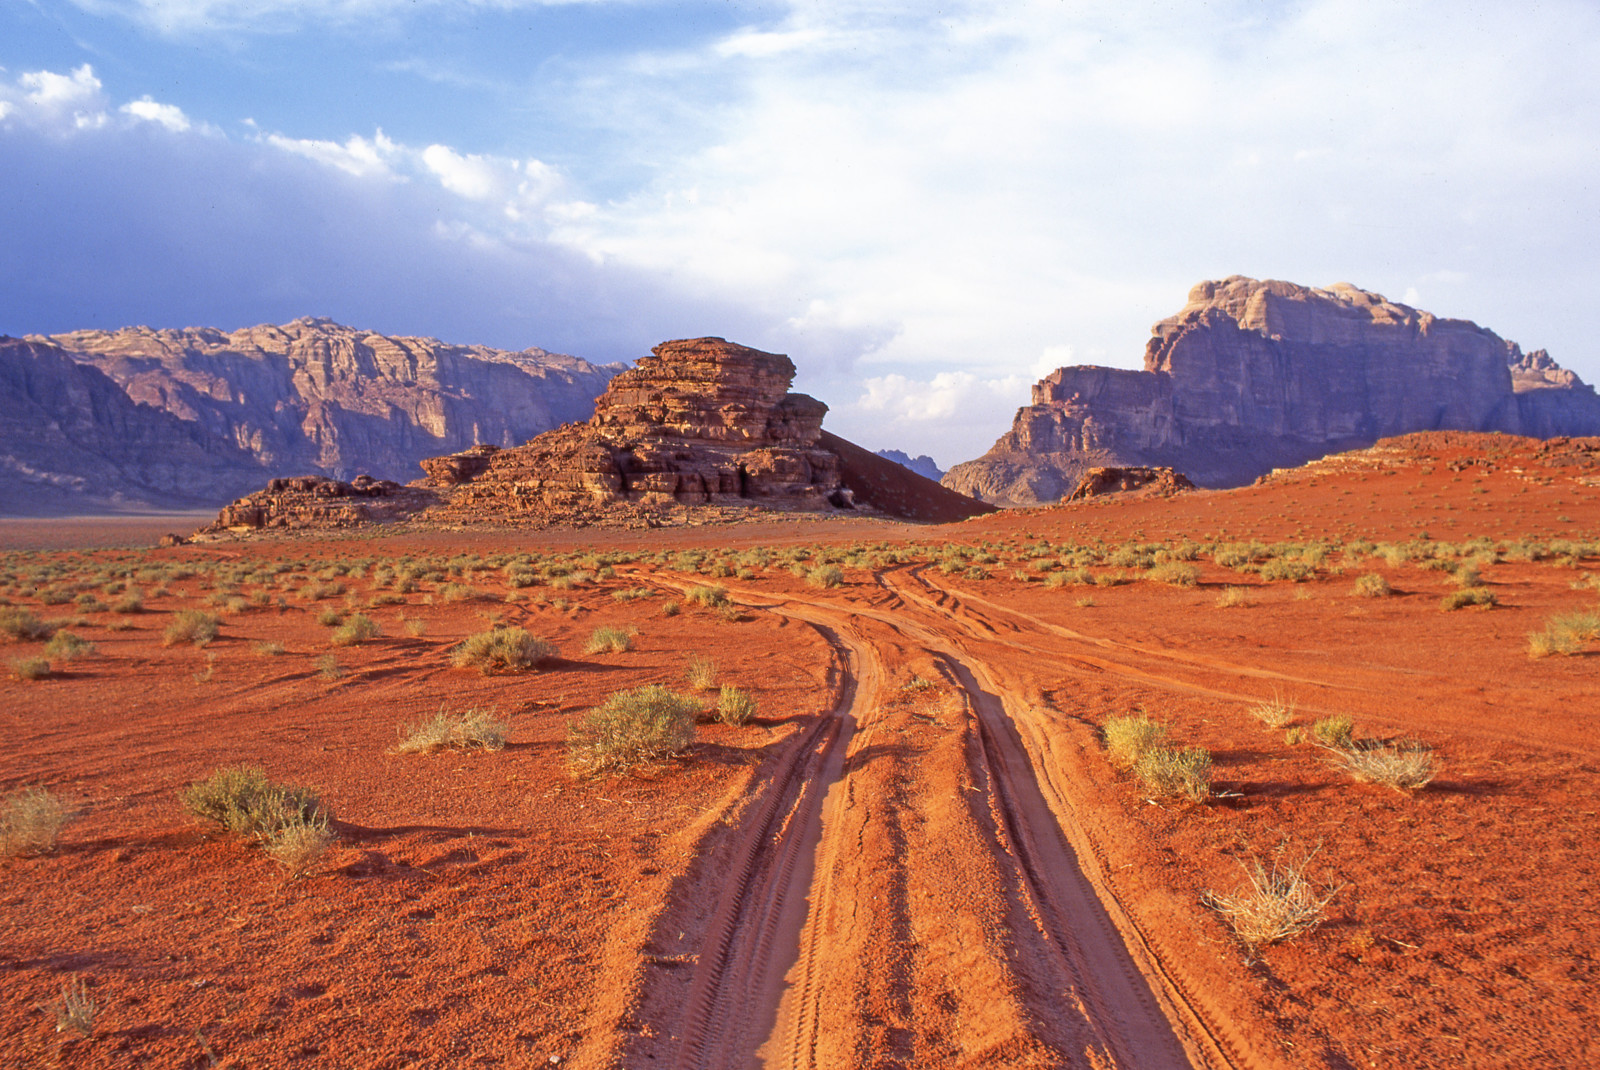 Red dirt roads leads to striking red cliffs in Wadi Rum, Jordan